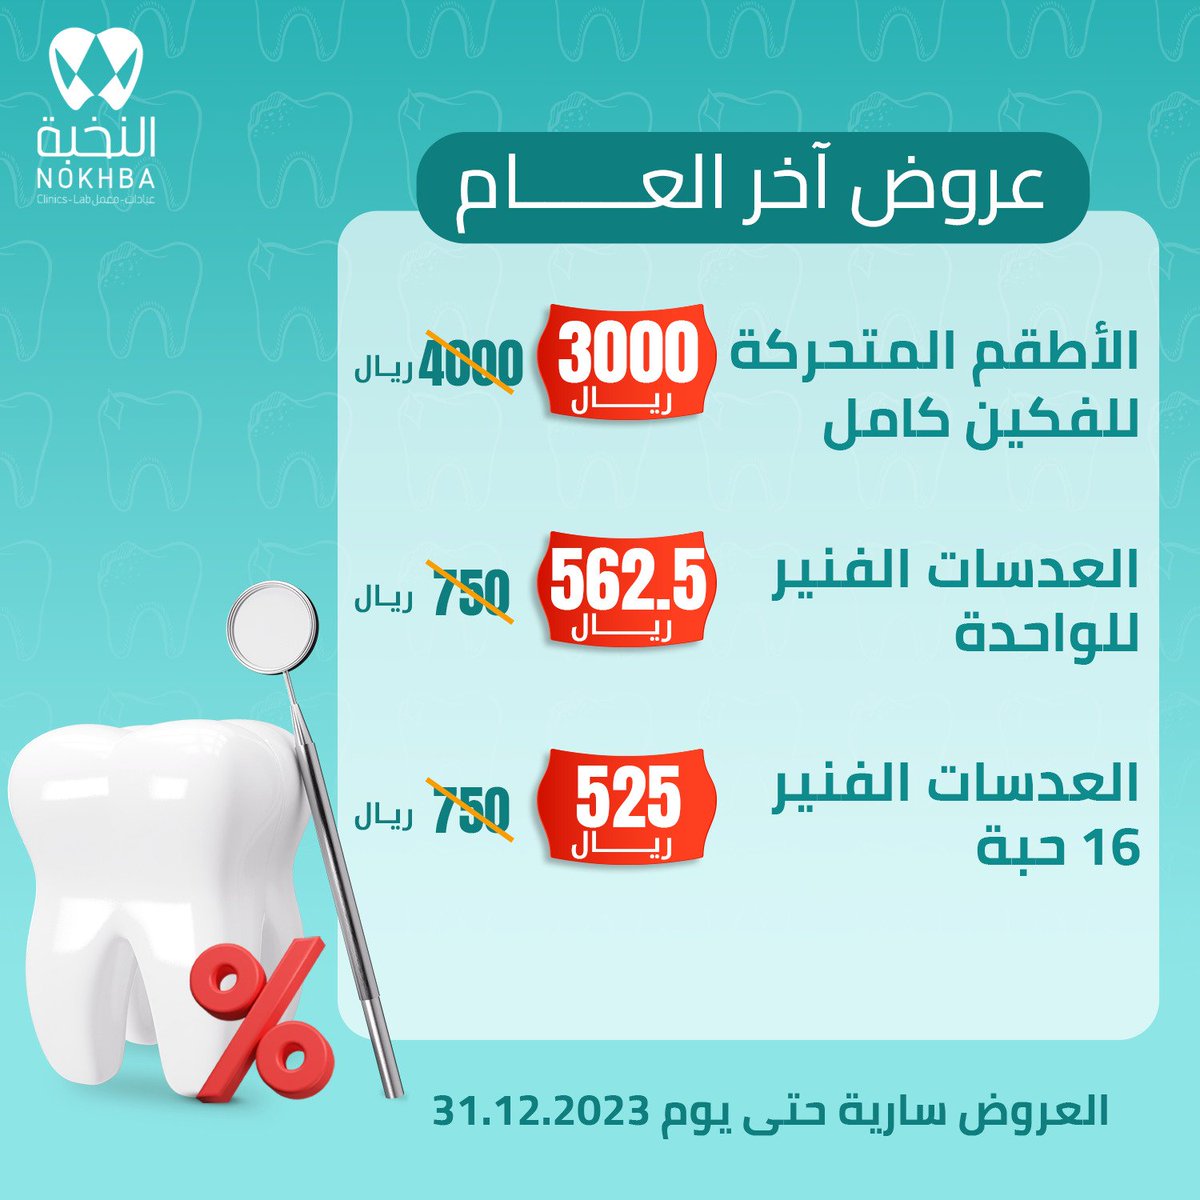 Nokhba_clinicss tweet picture